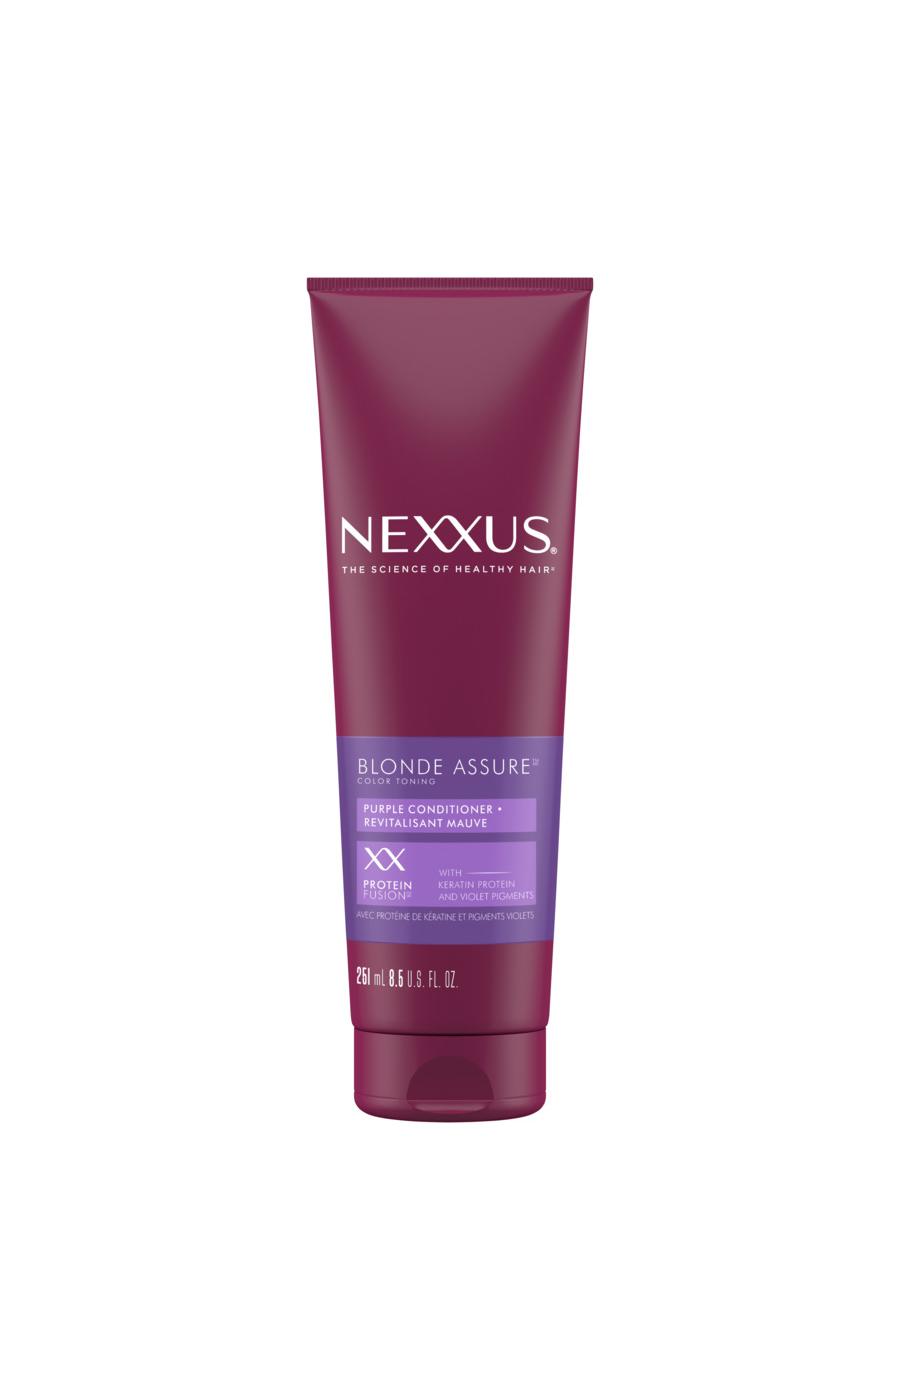 Nexxus Blonde Assure Purple Conditioner with Keratin; image 1 of 5